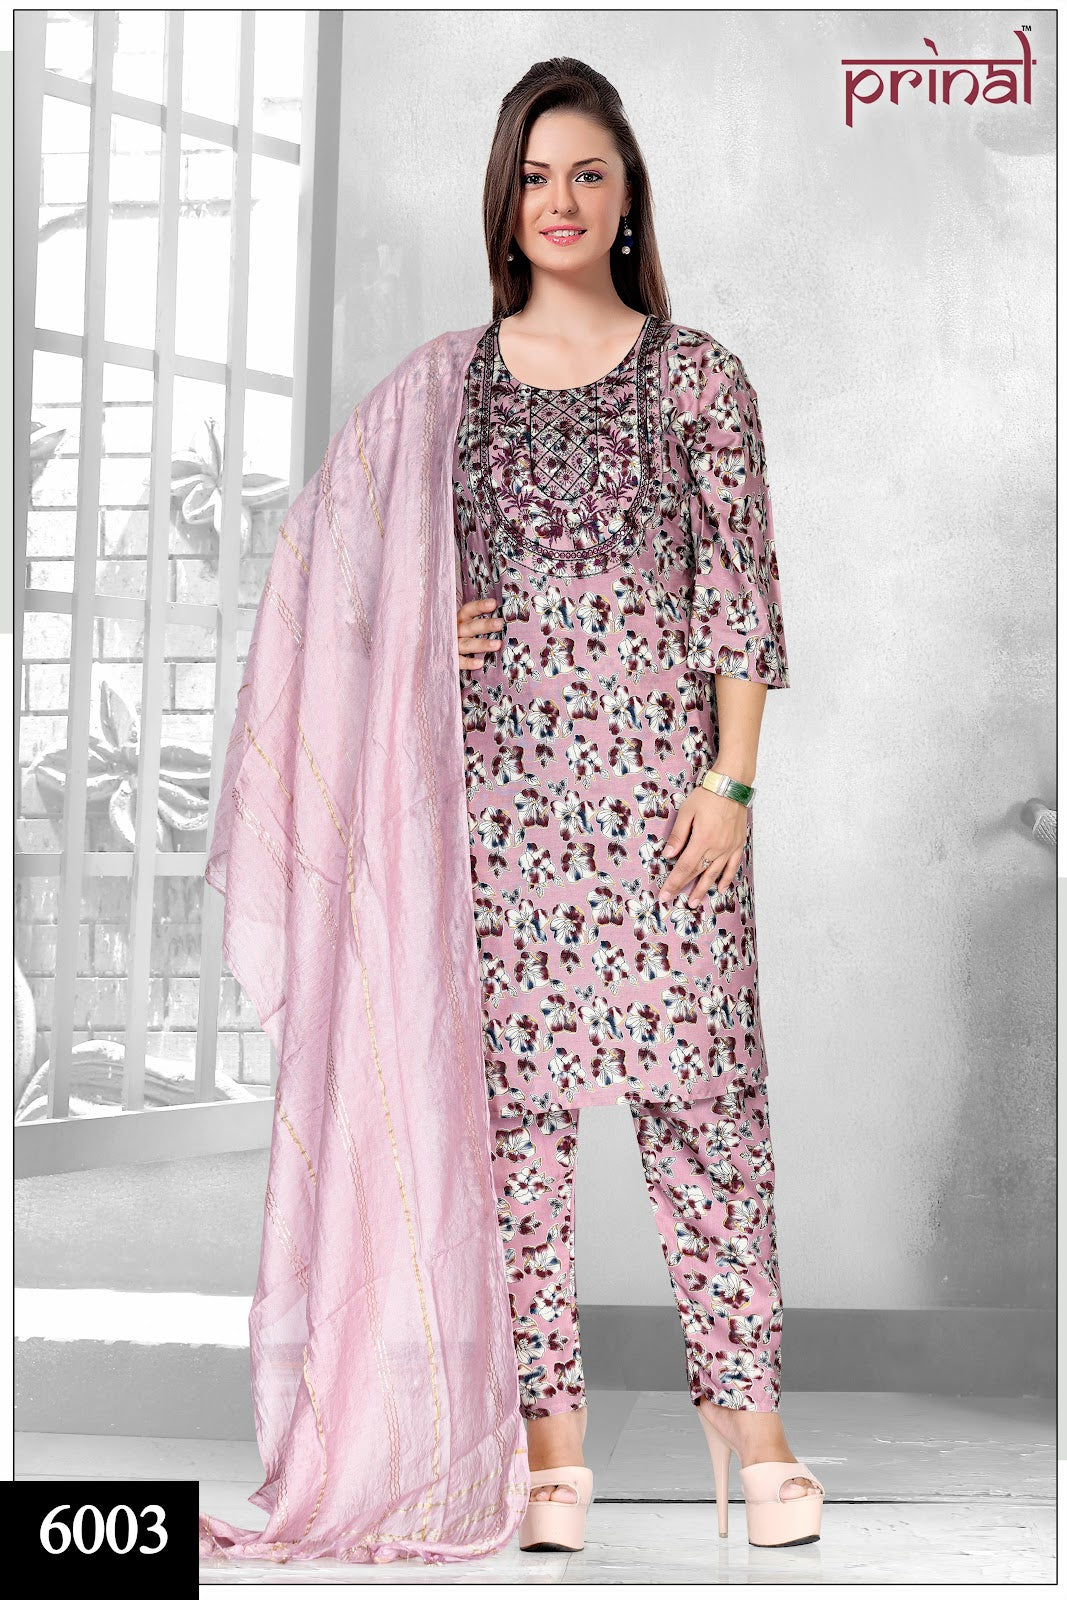 Rakhi Prinal Heavy Rayon Readymade Pant Style Suits Exporter India